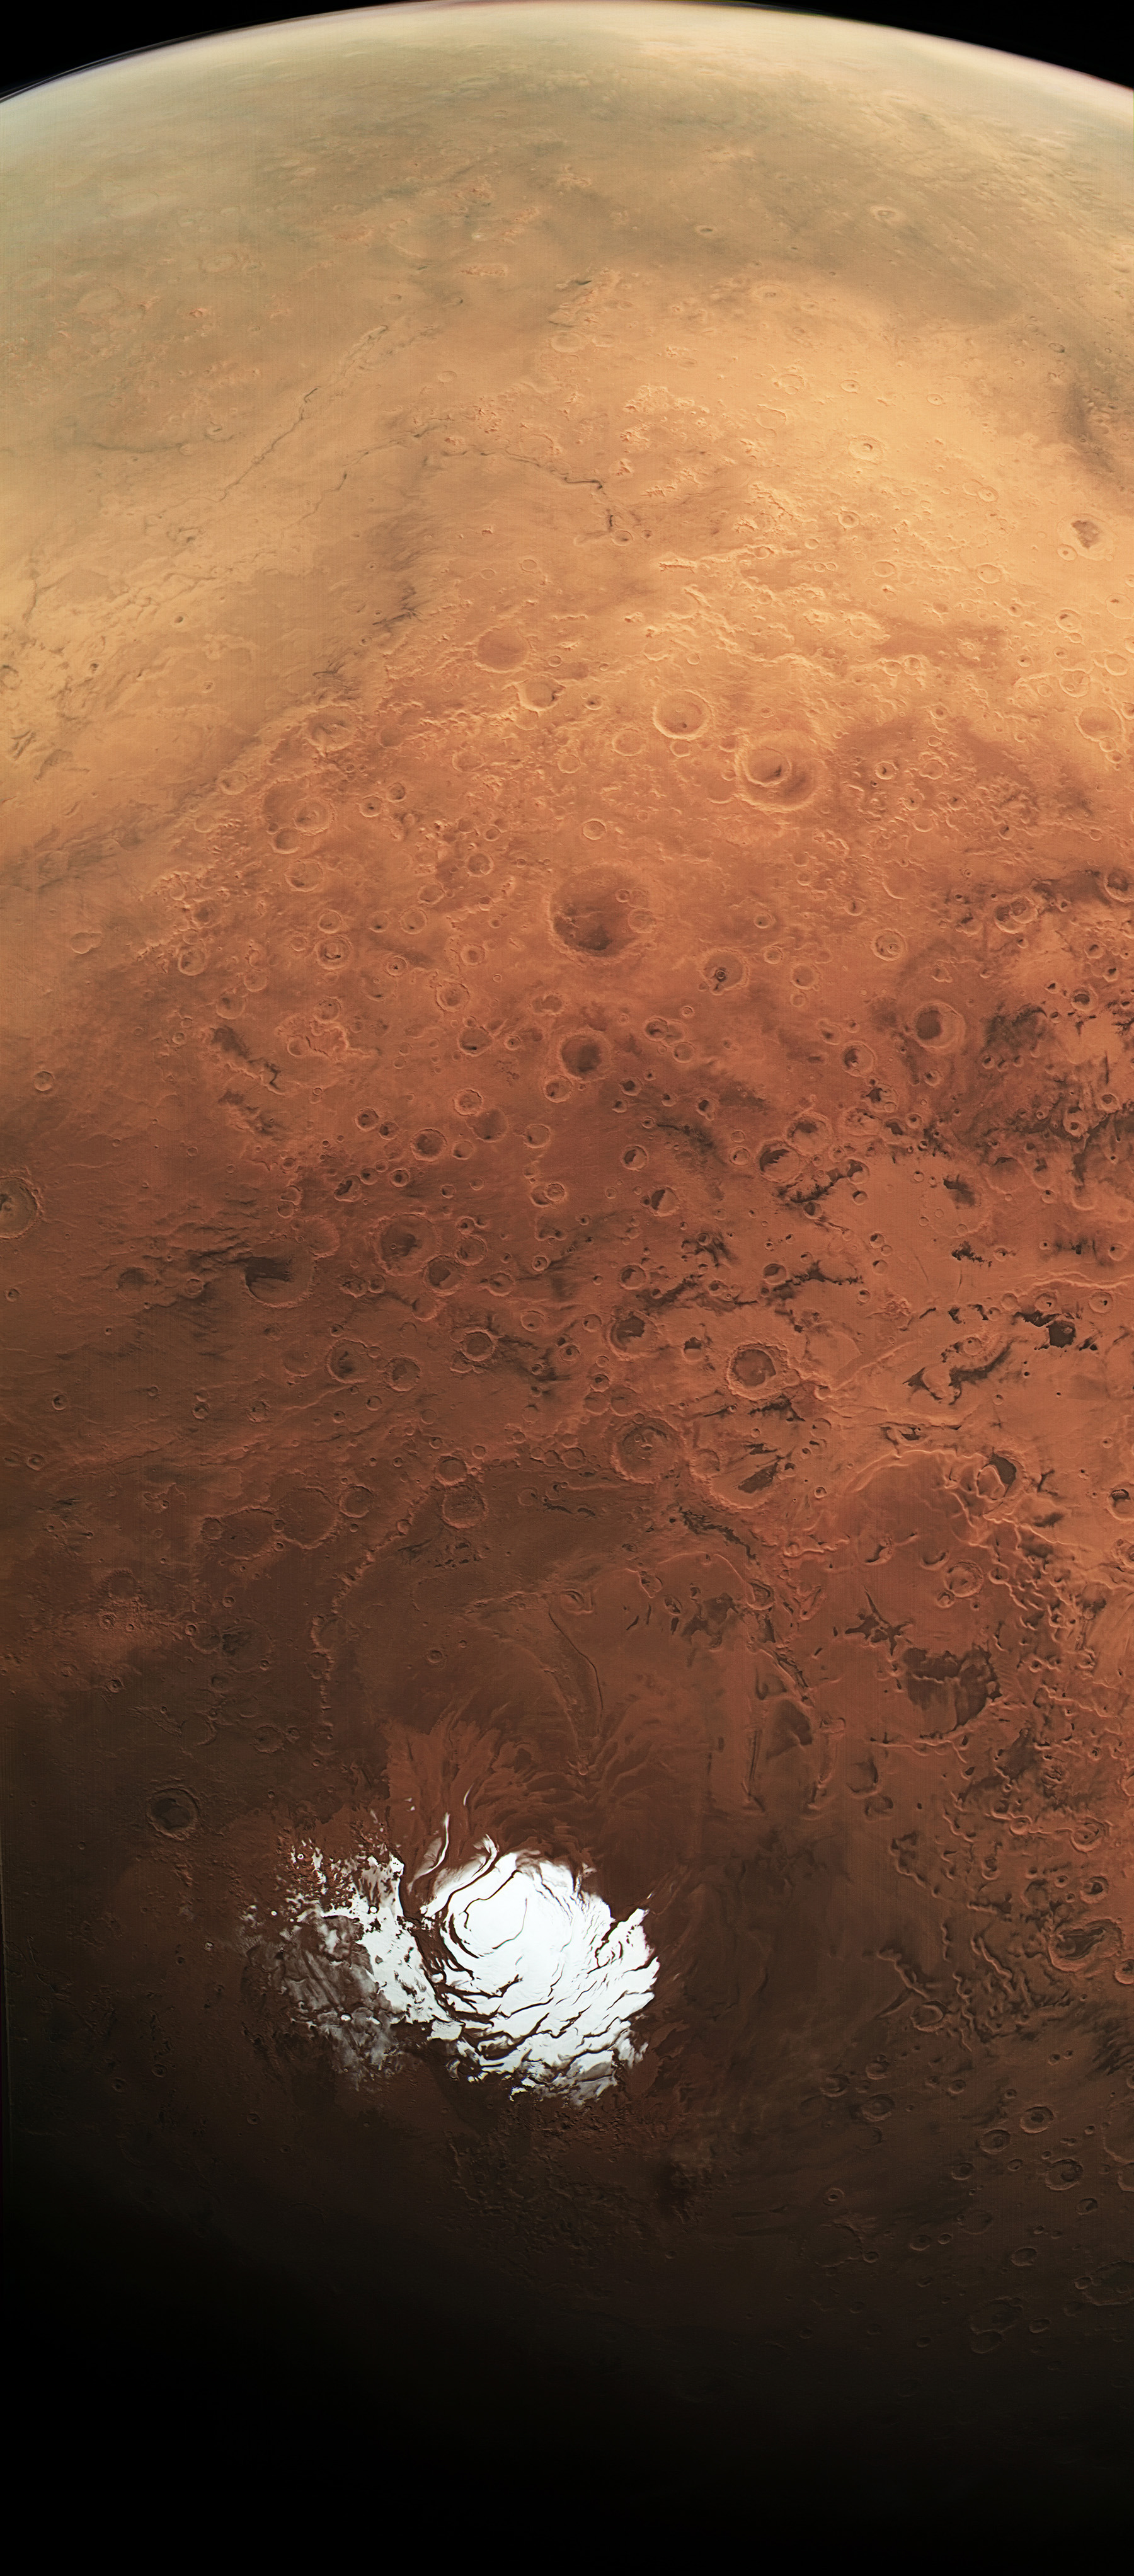 Mars_south_pole_and_beyond